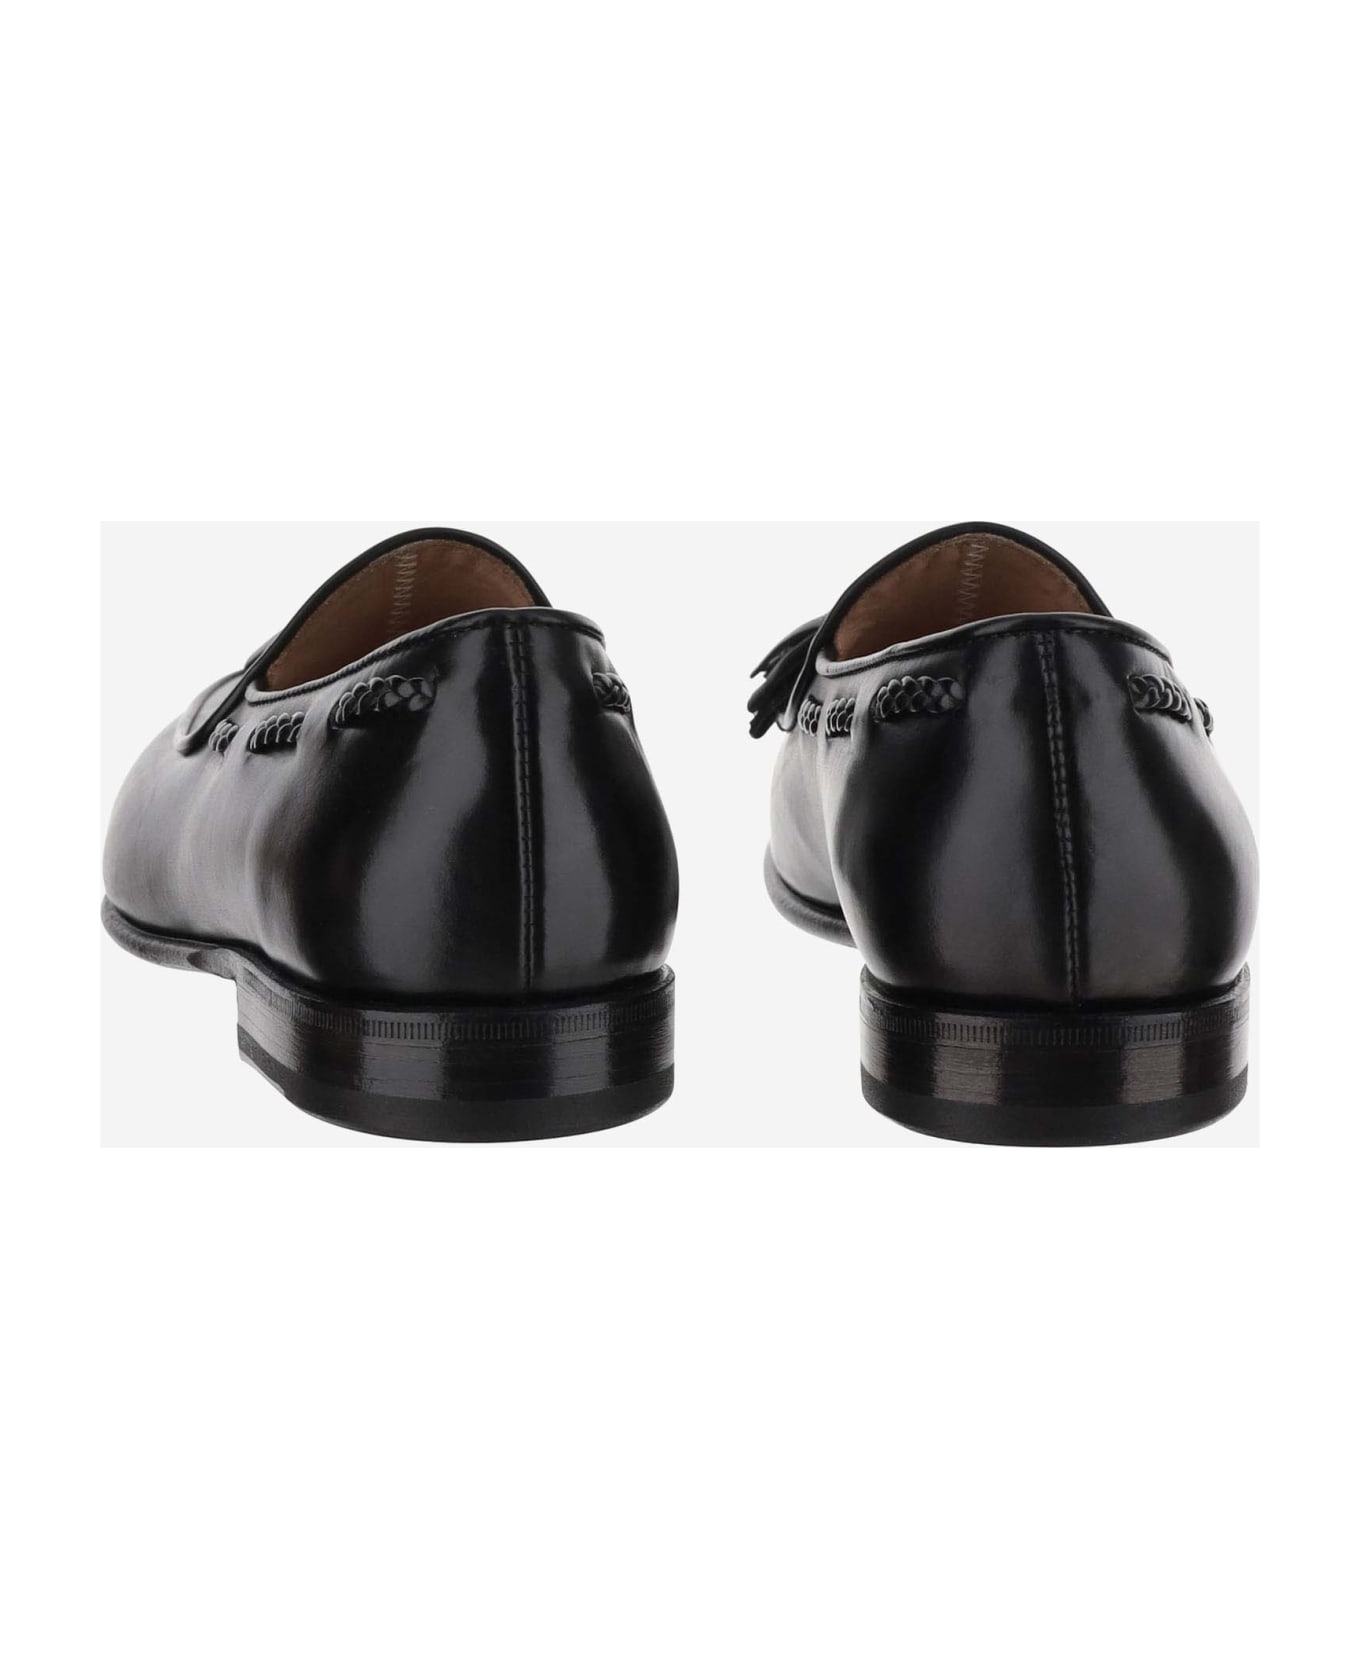 Hervè Chapelier Leather Loafers - Black フラットシューズ